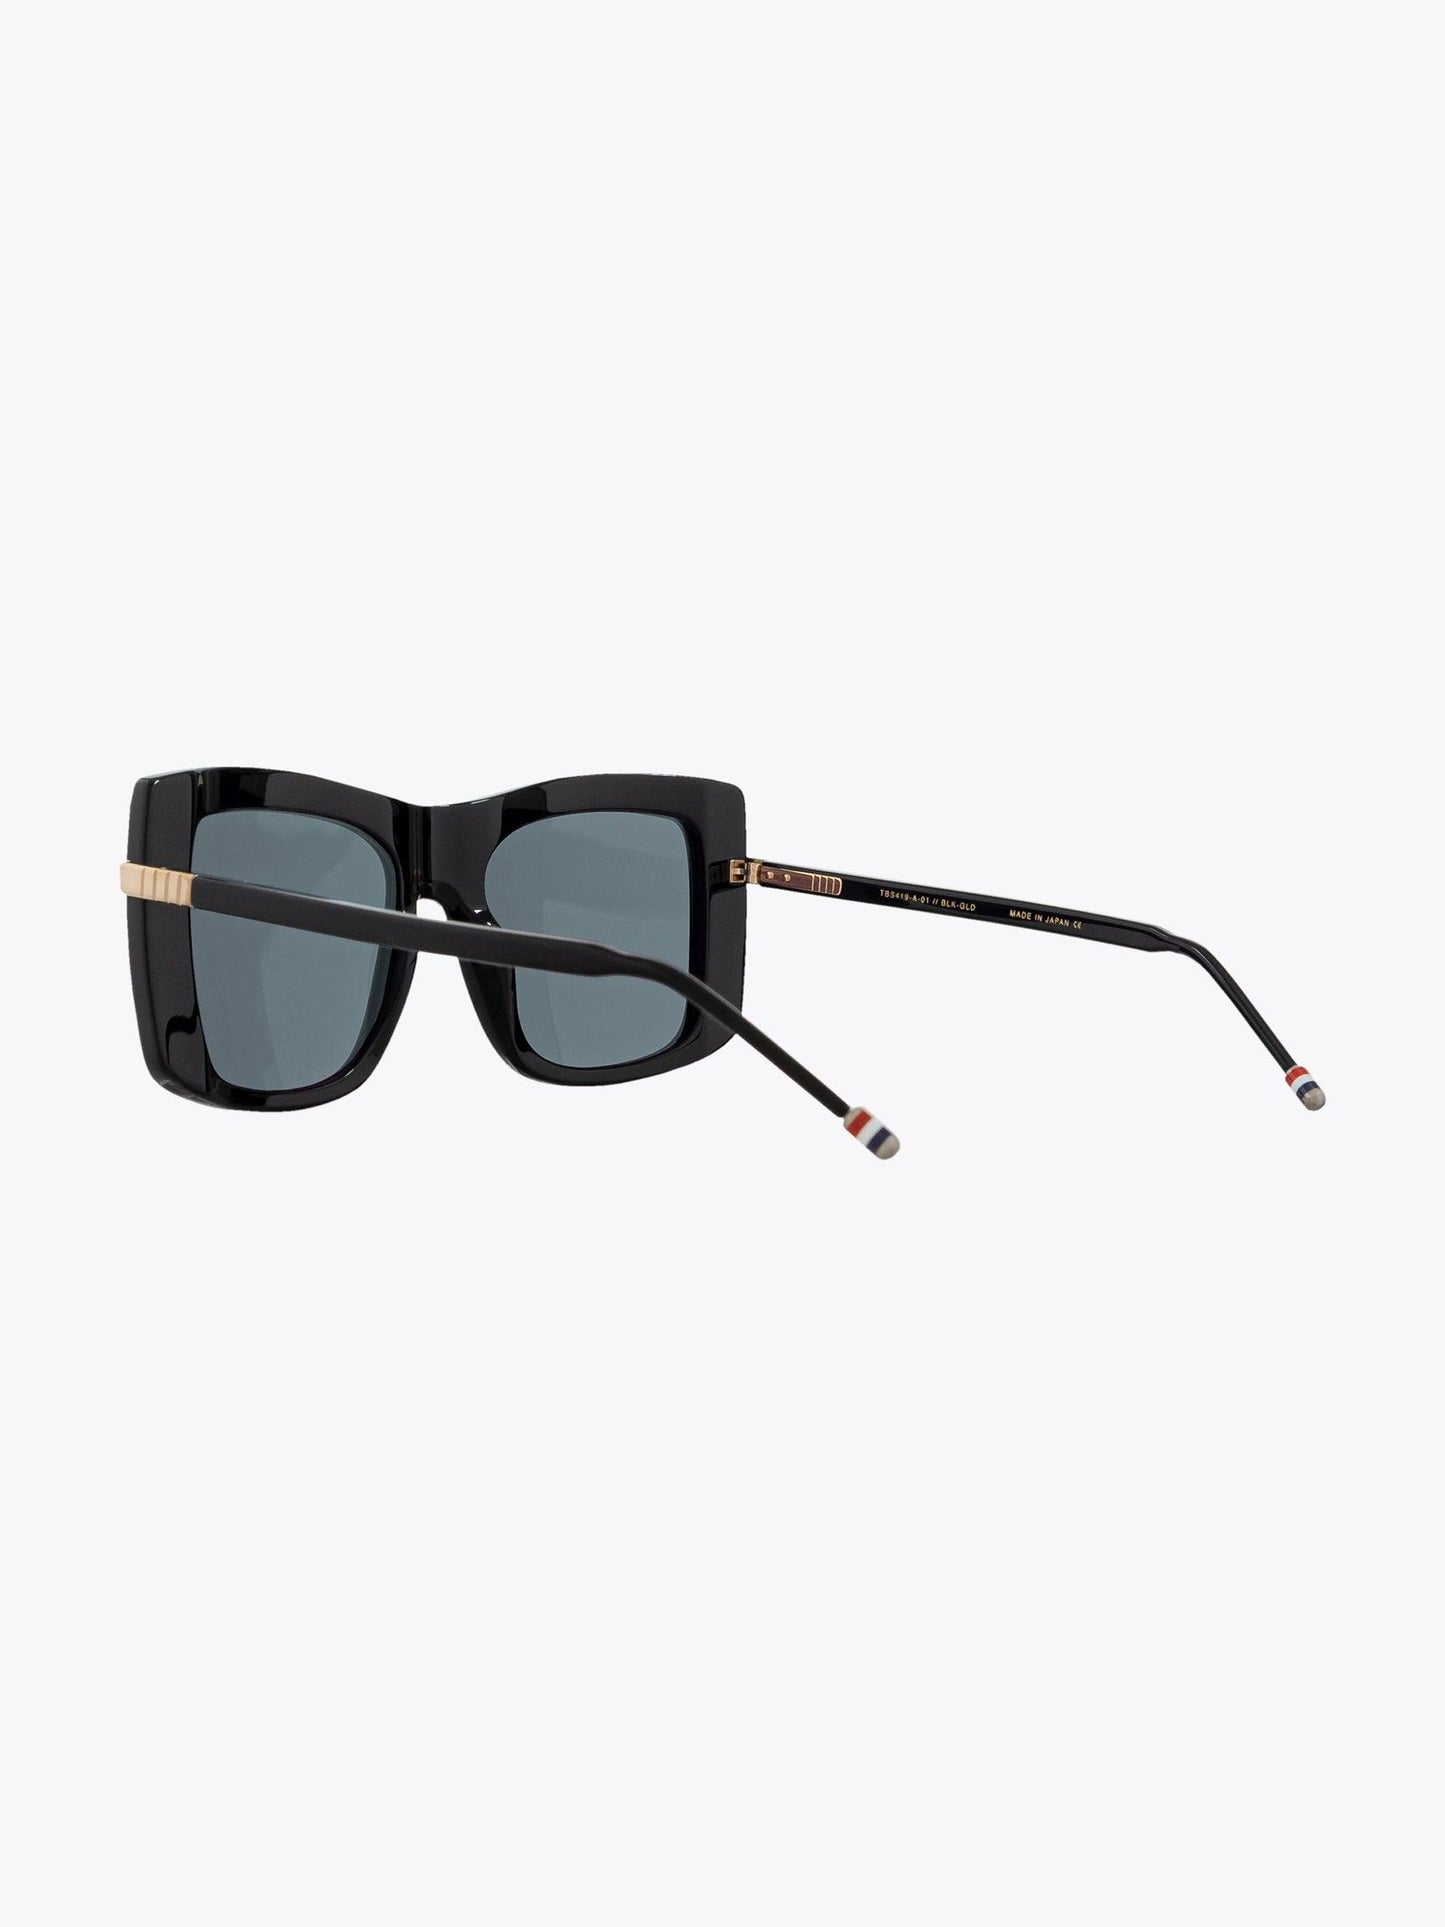 Thom Browne TB-419 Black Sunglasses - APODEP.com